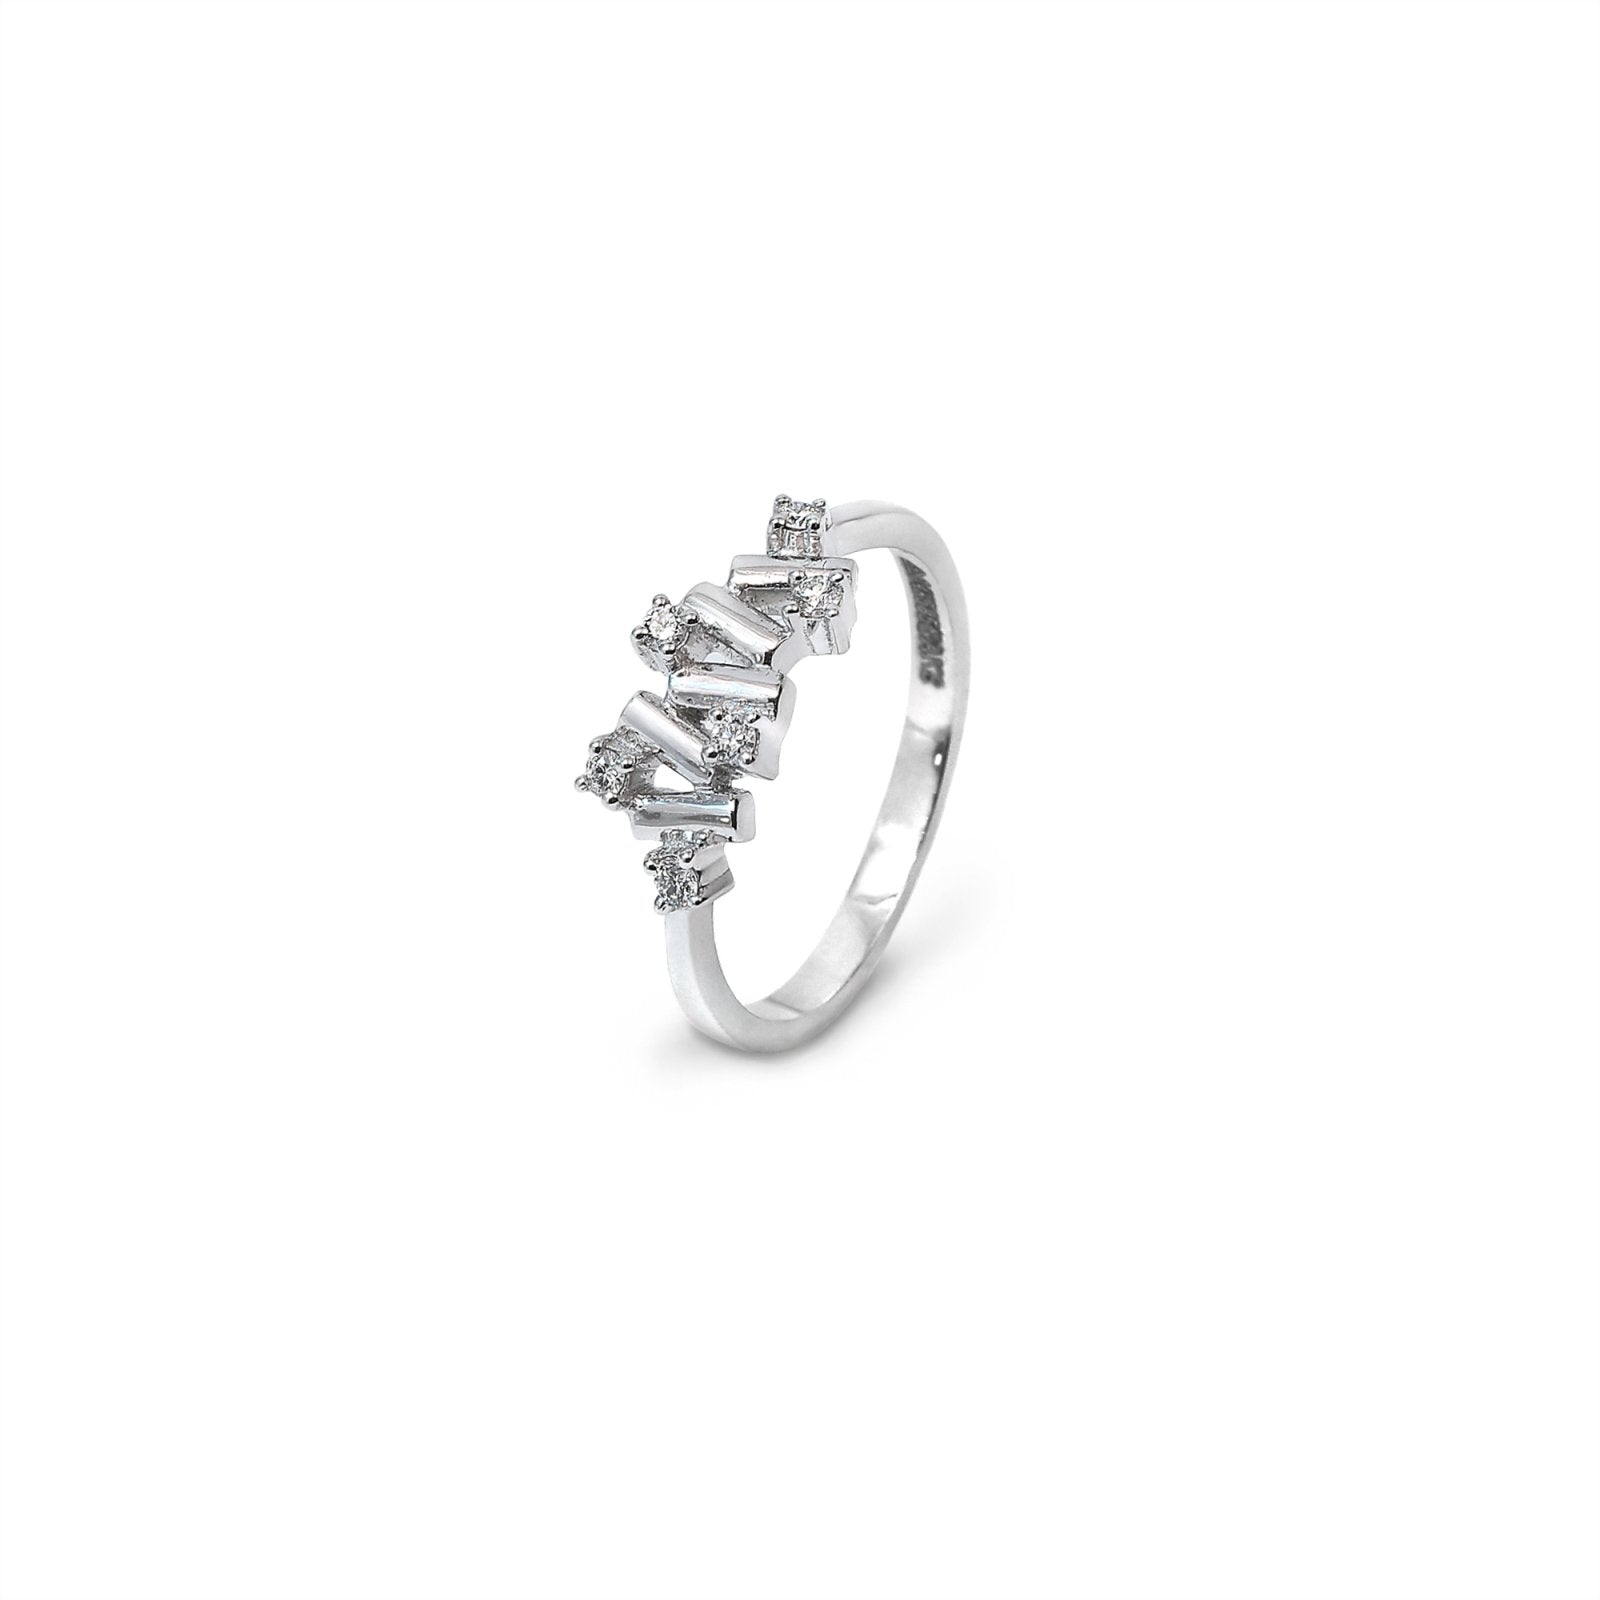 Zigzag Design White Gold Diamond Ring14k TDW:0.12ct2.6gr